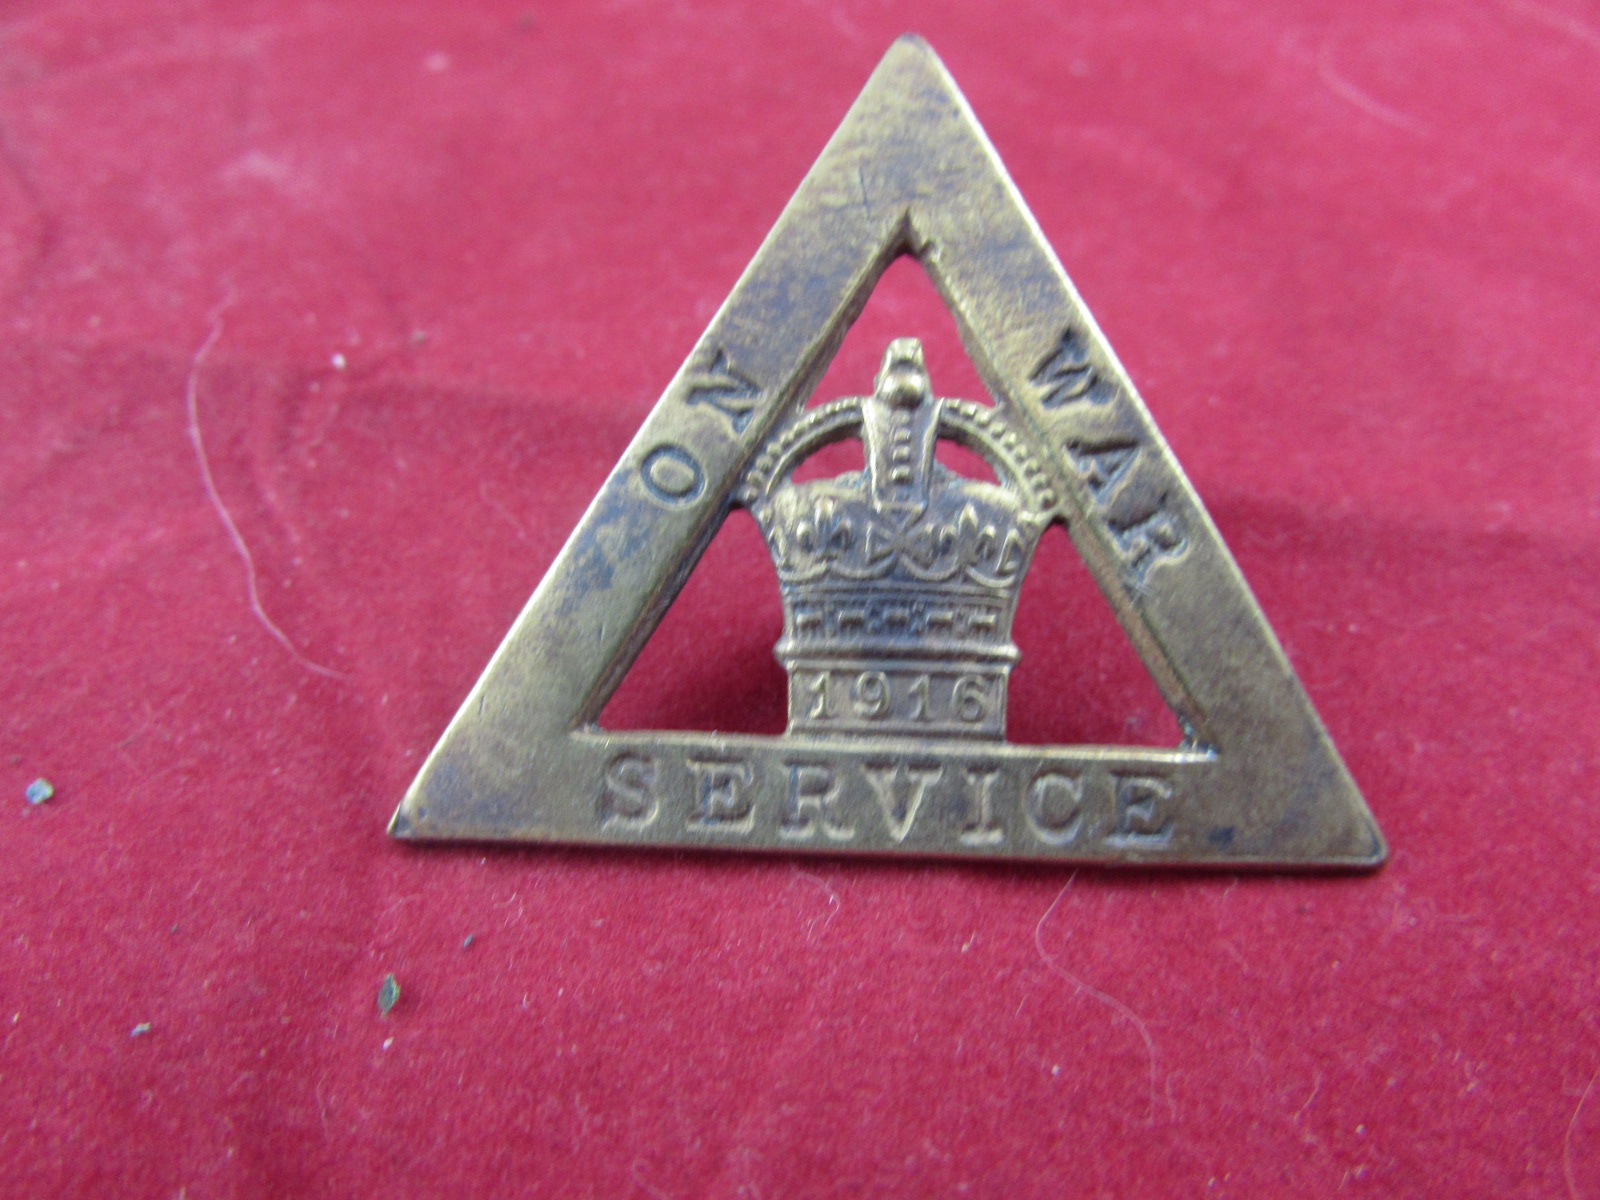 WW1 On War Service 1916 Women's munition workers badge.